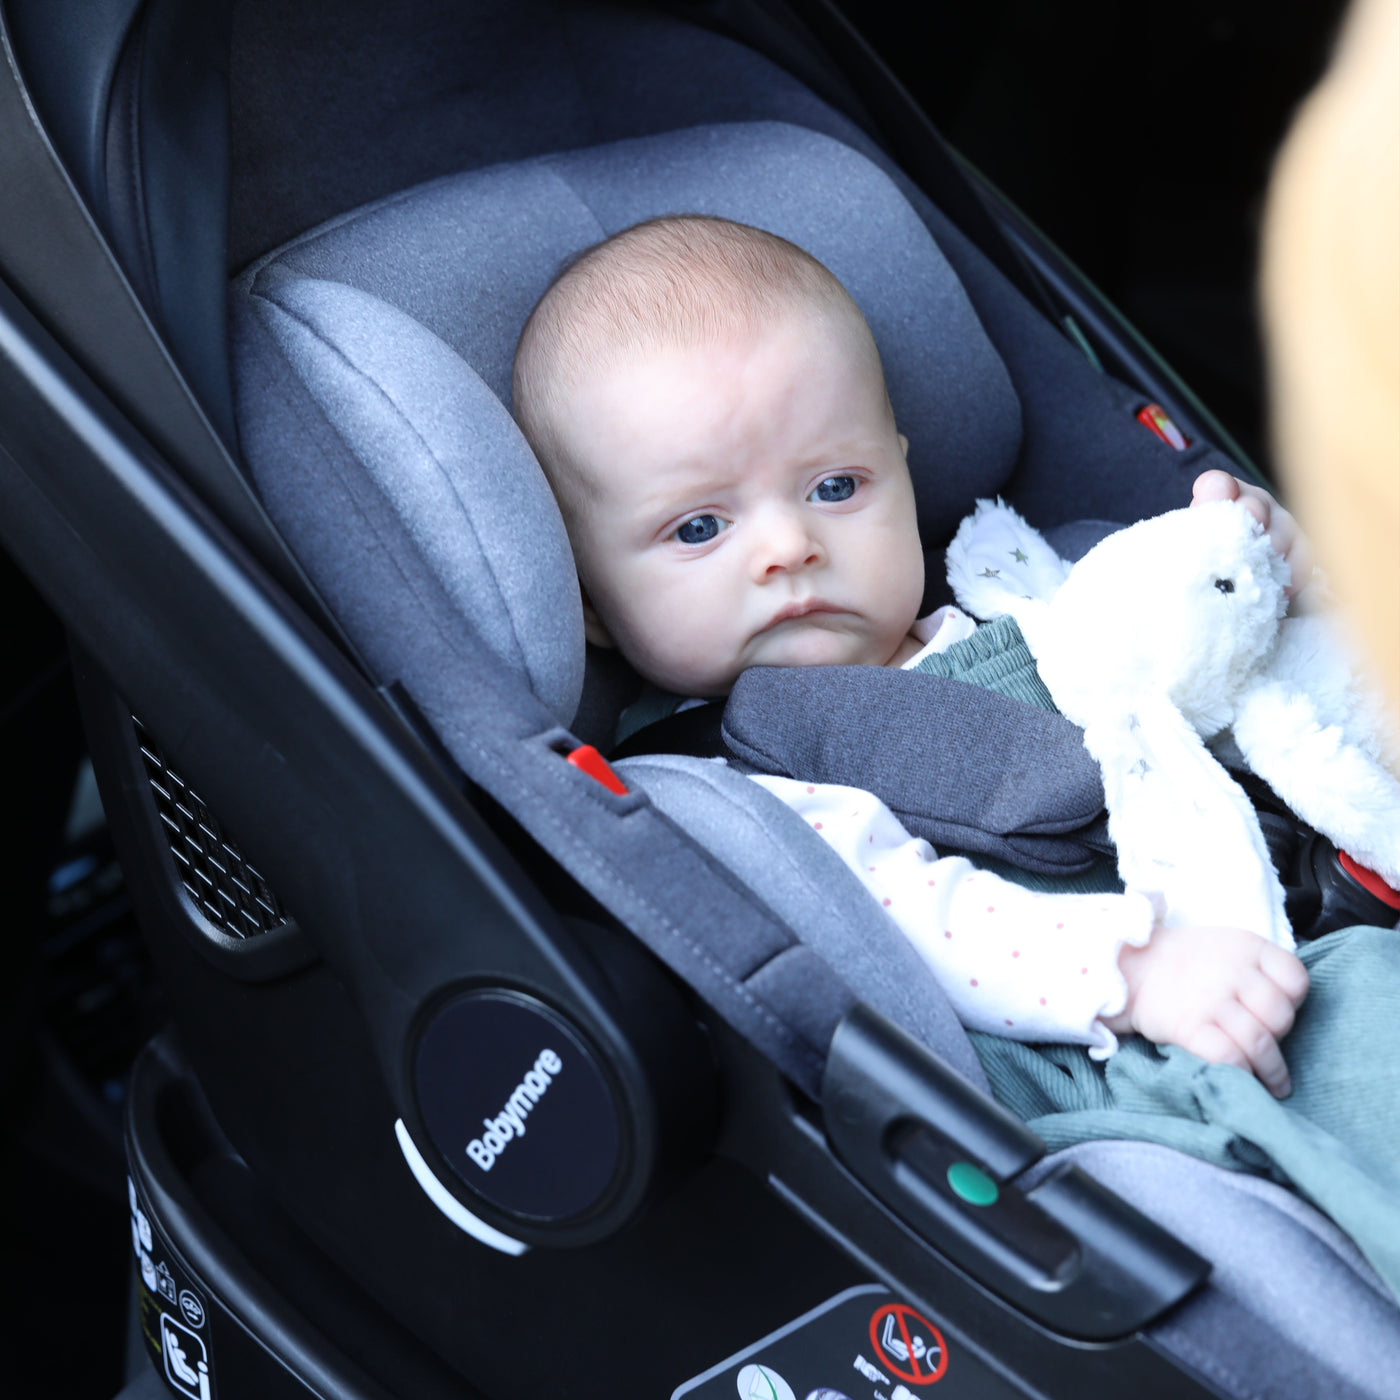 Coco i-Size Baby Car Seat with Isofix Base-Car Seats-Babymore-Yes Bebe